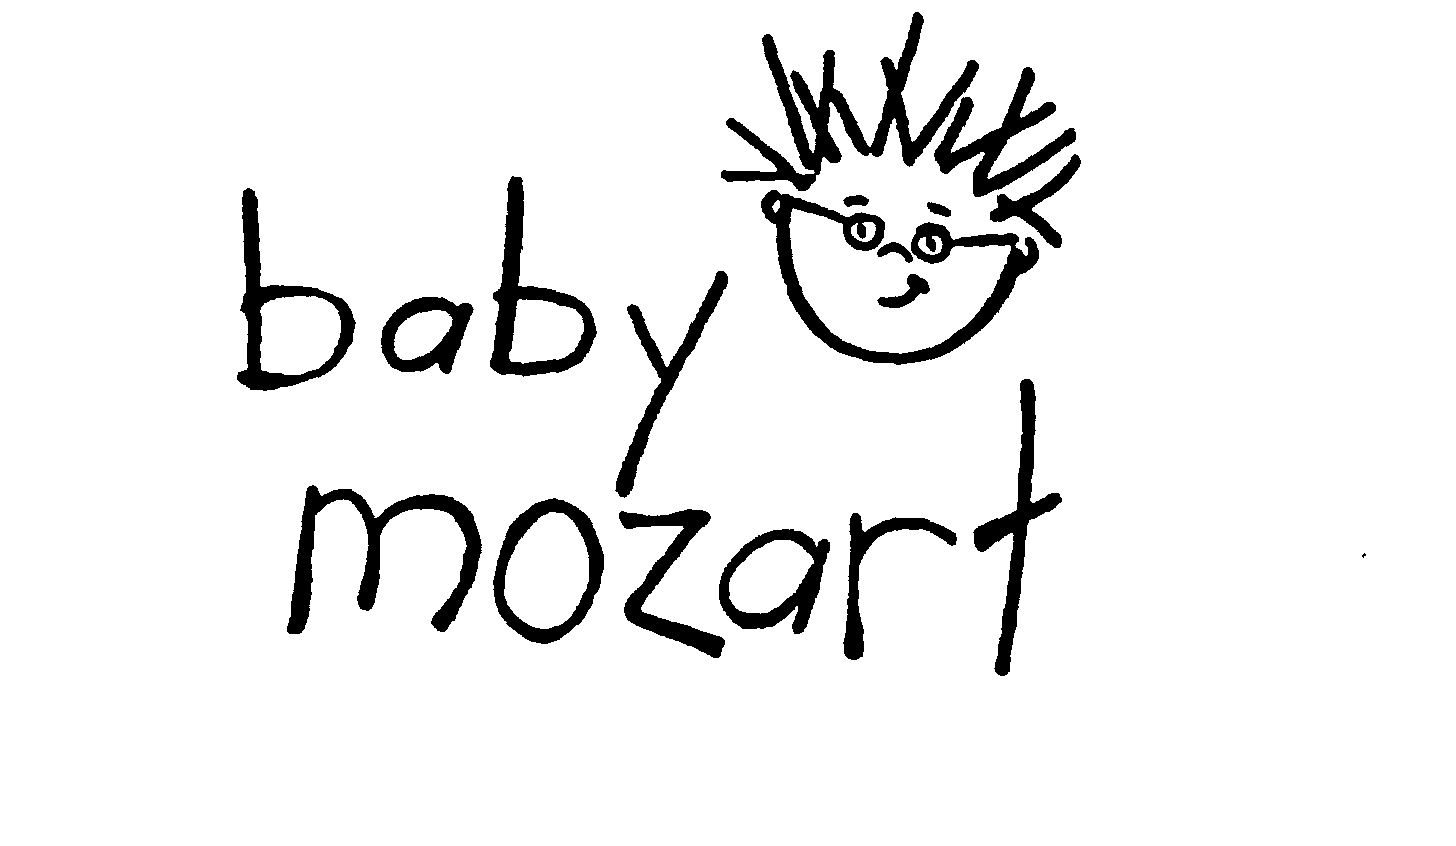 Trademark Logo BABY MOZART